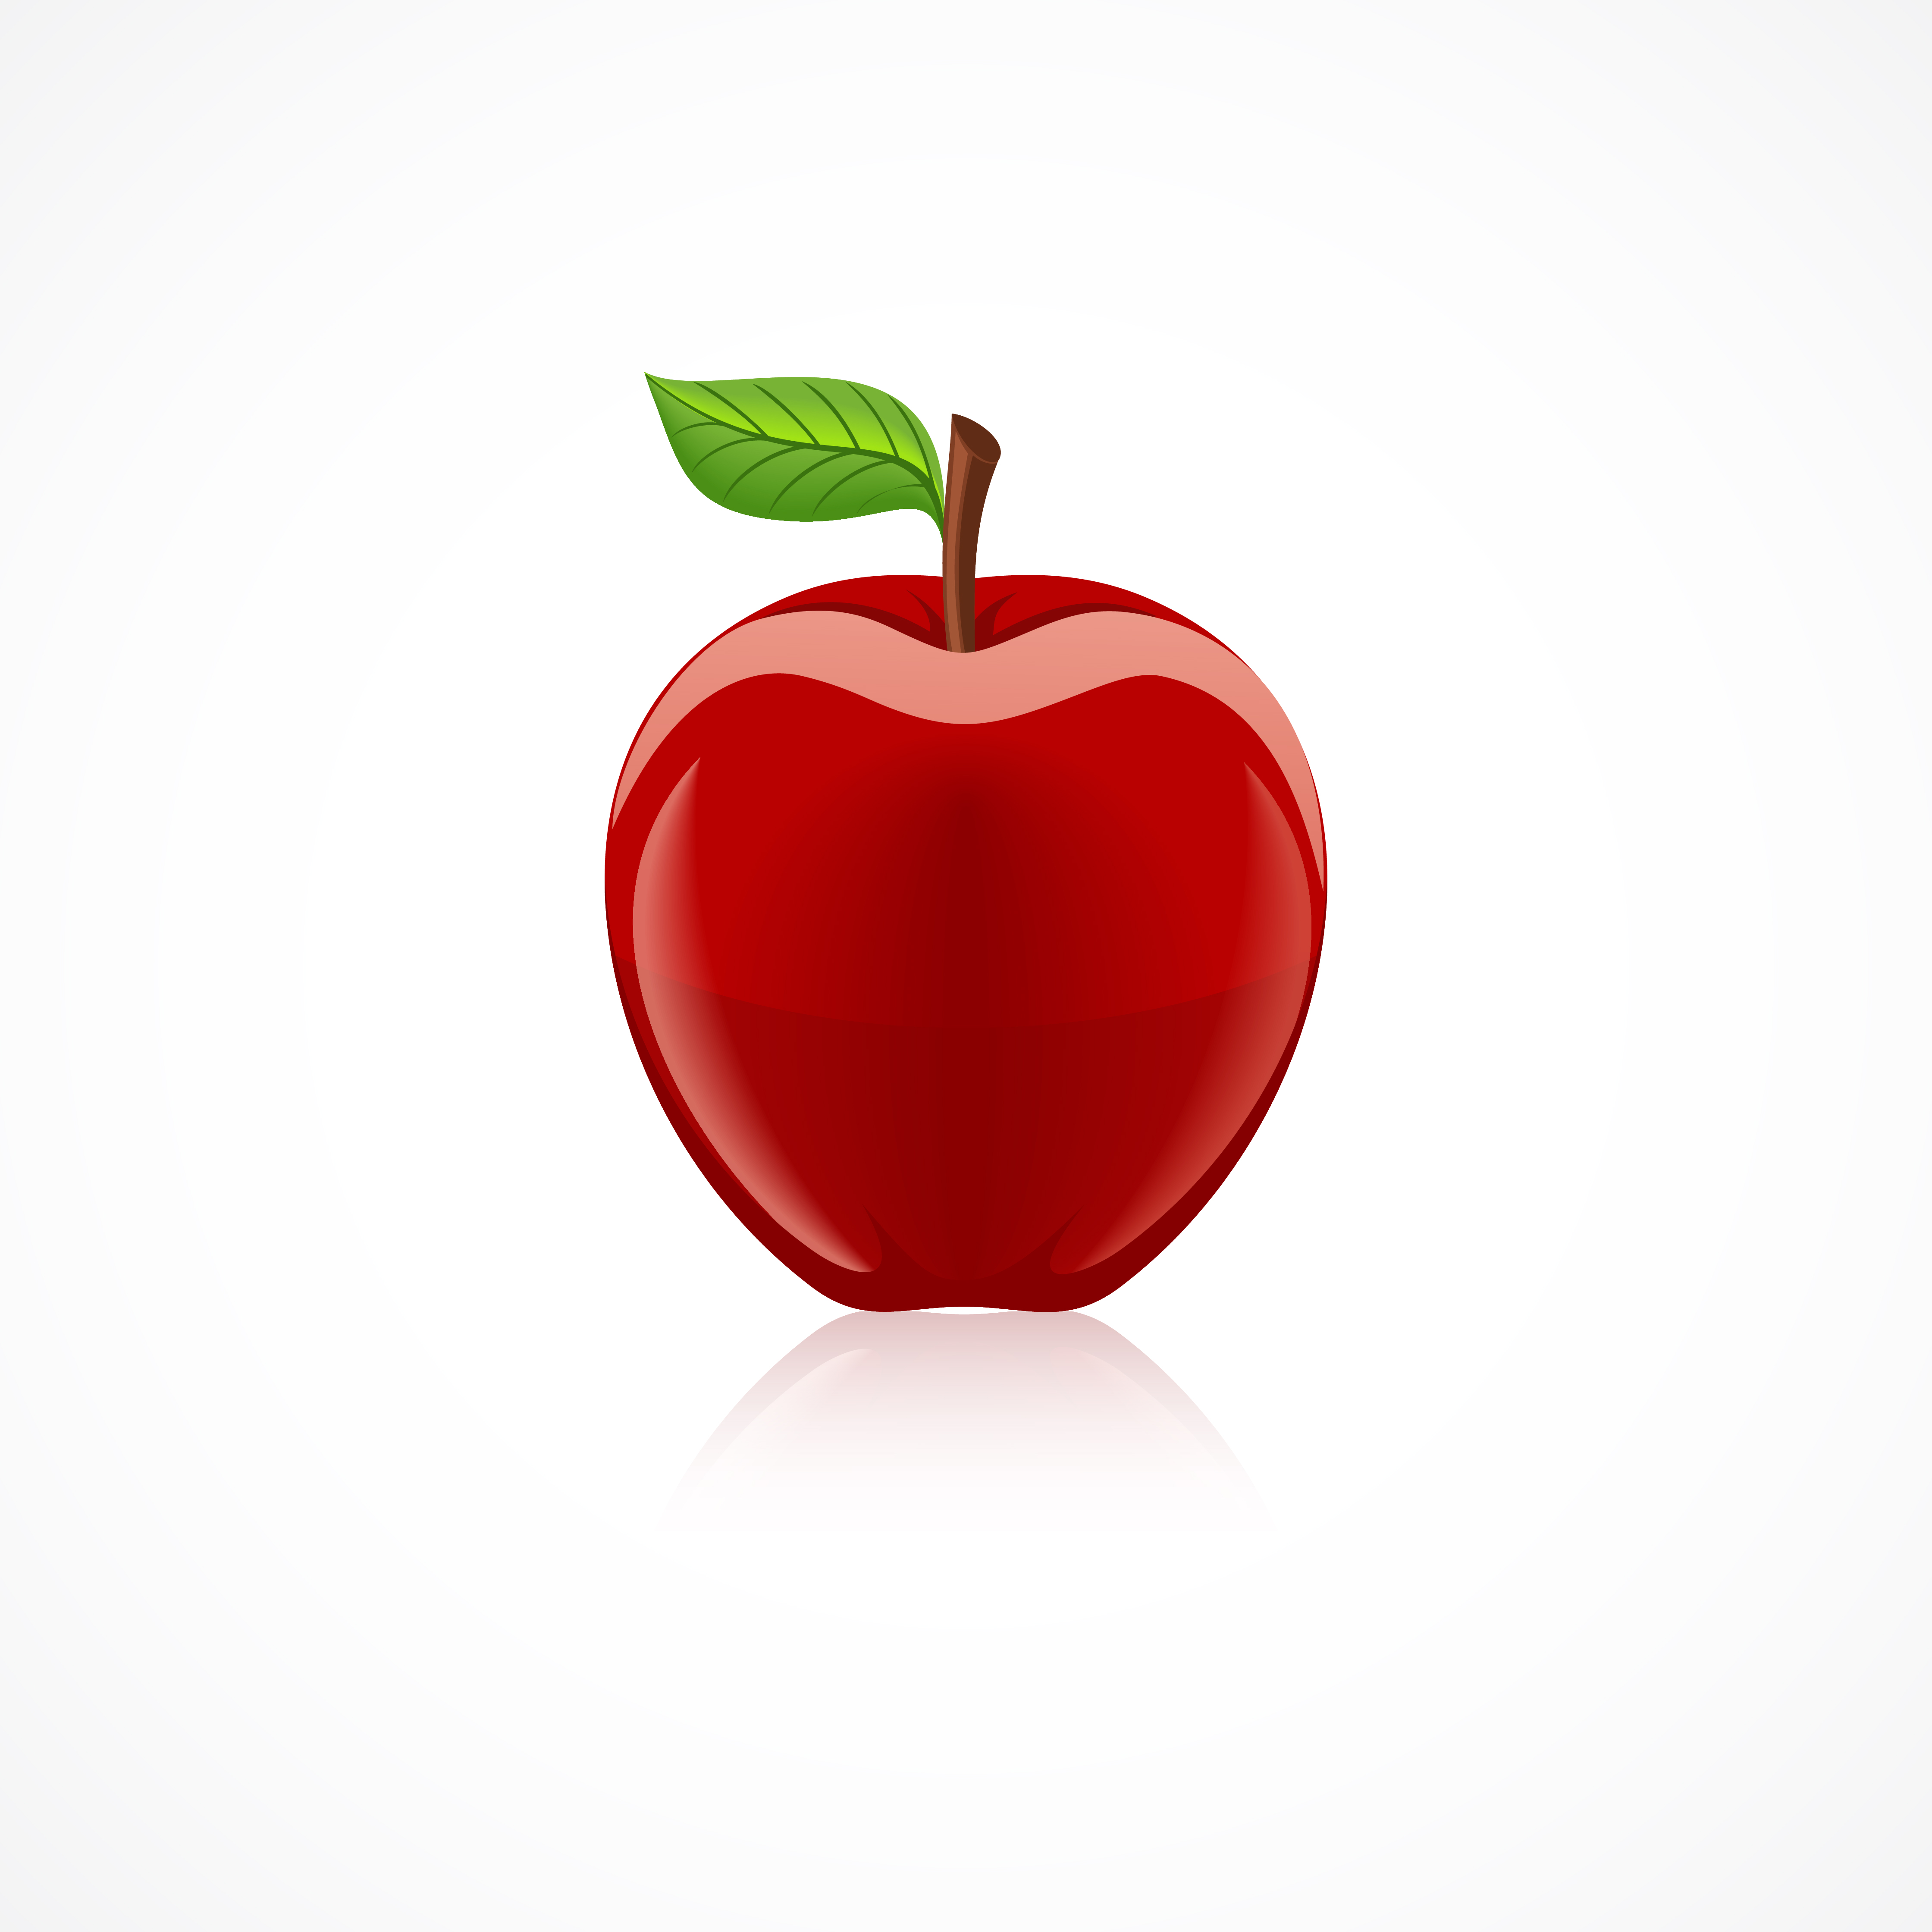 Download Apple fruit icon 453555 - Download Free Vectors, Clipart Graphics & Vector Art